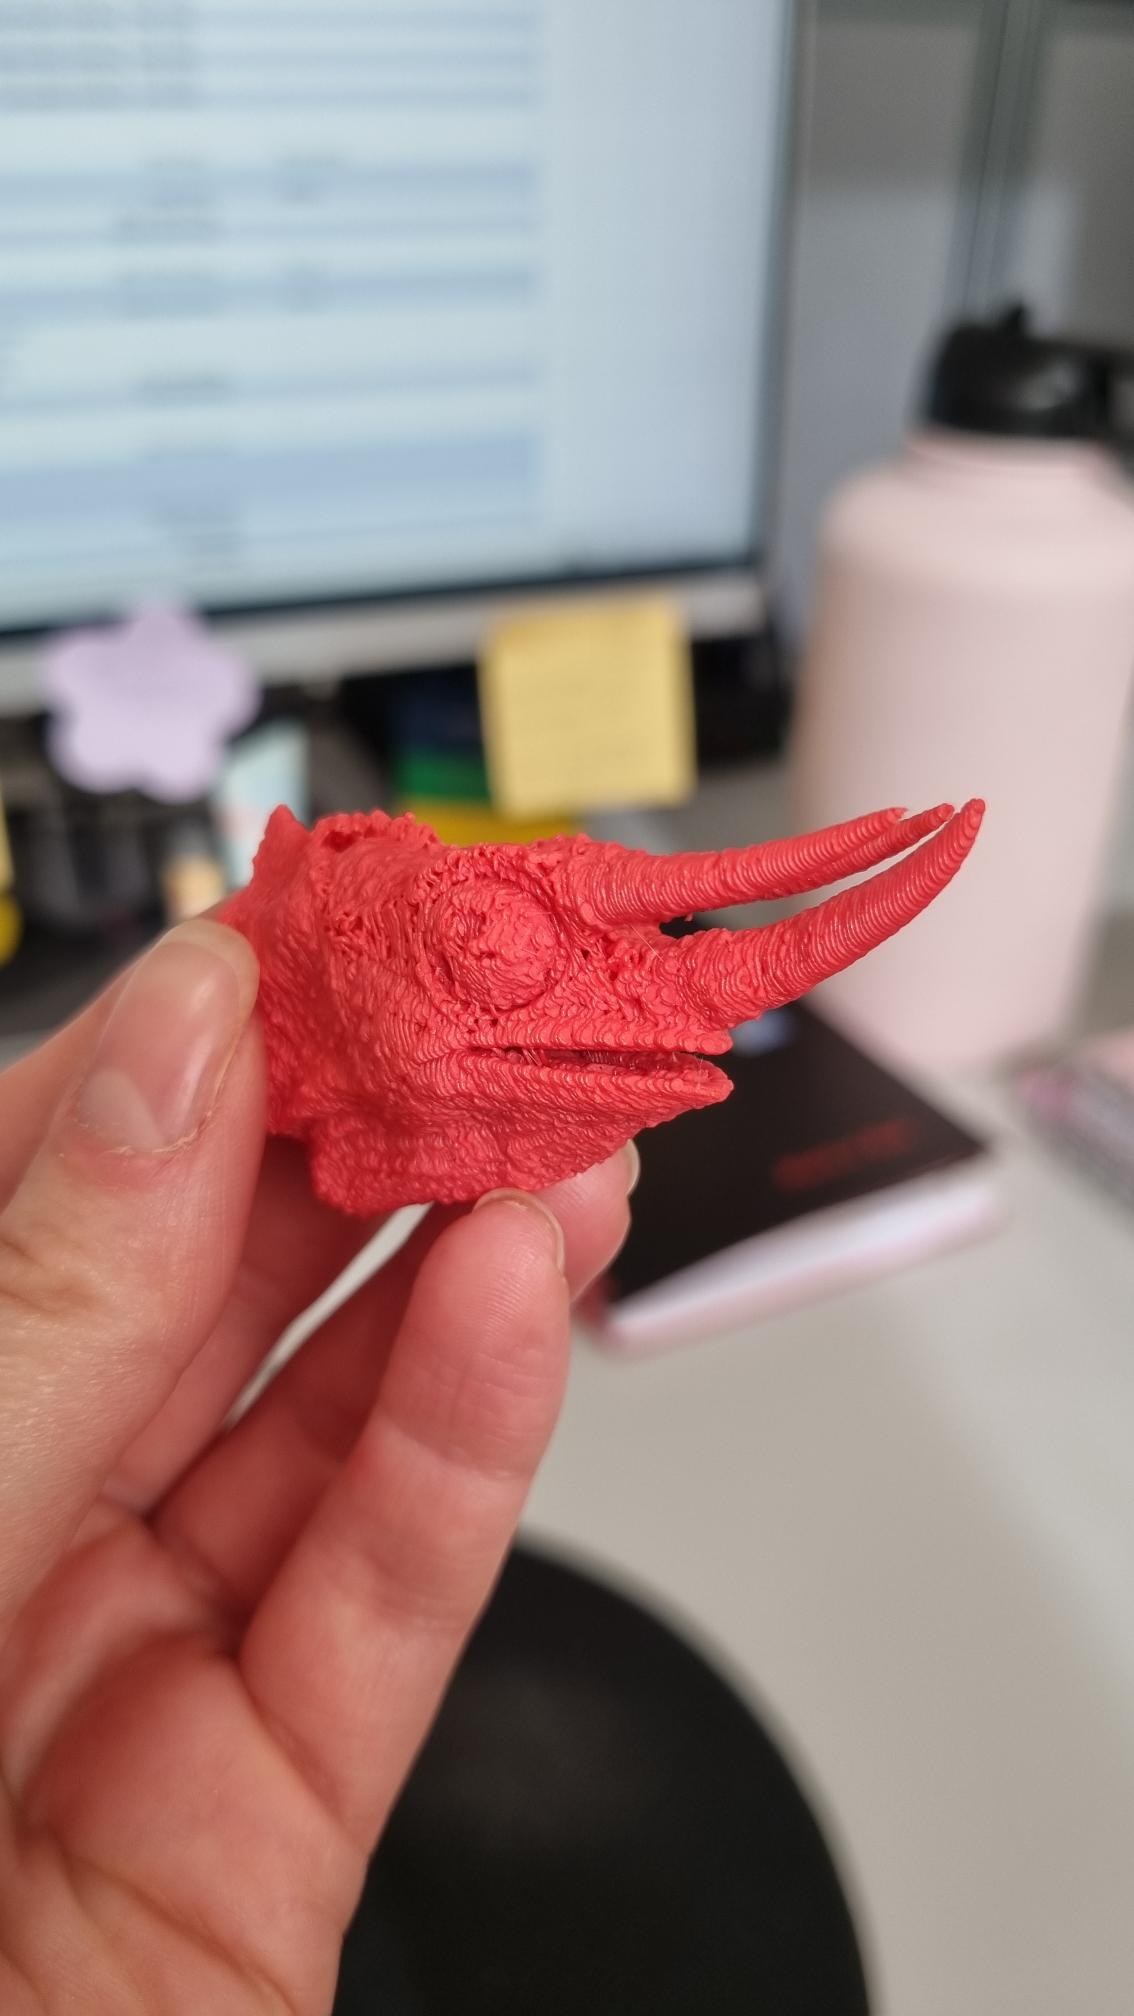 Image of a red 3D printed chameleon skull